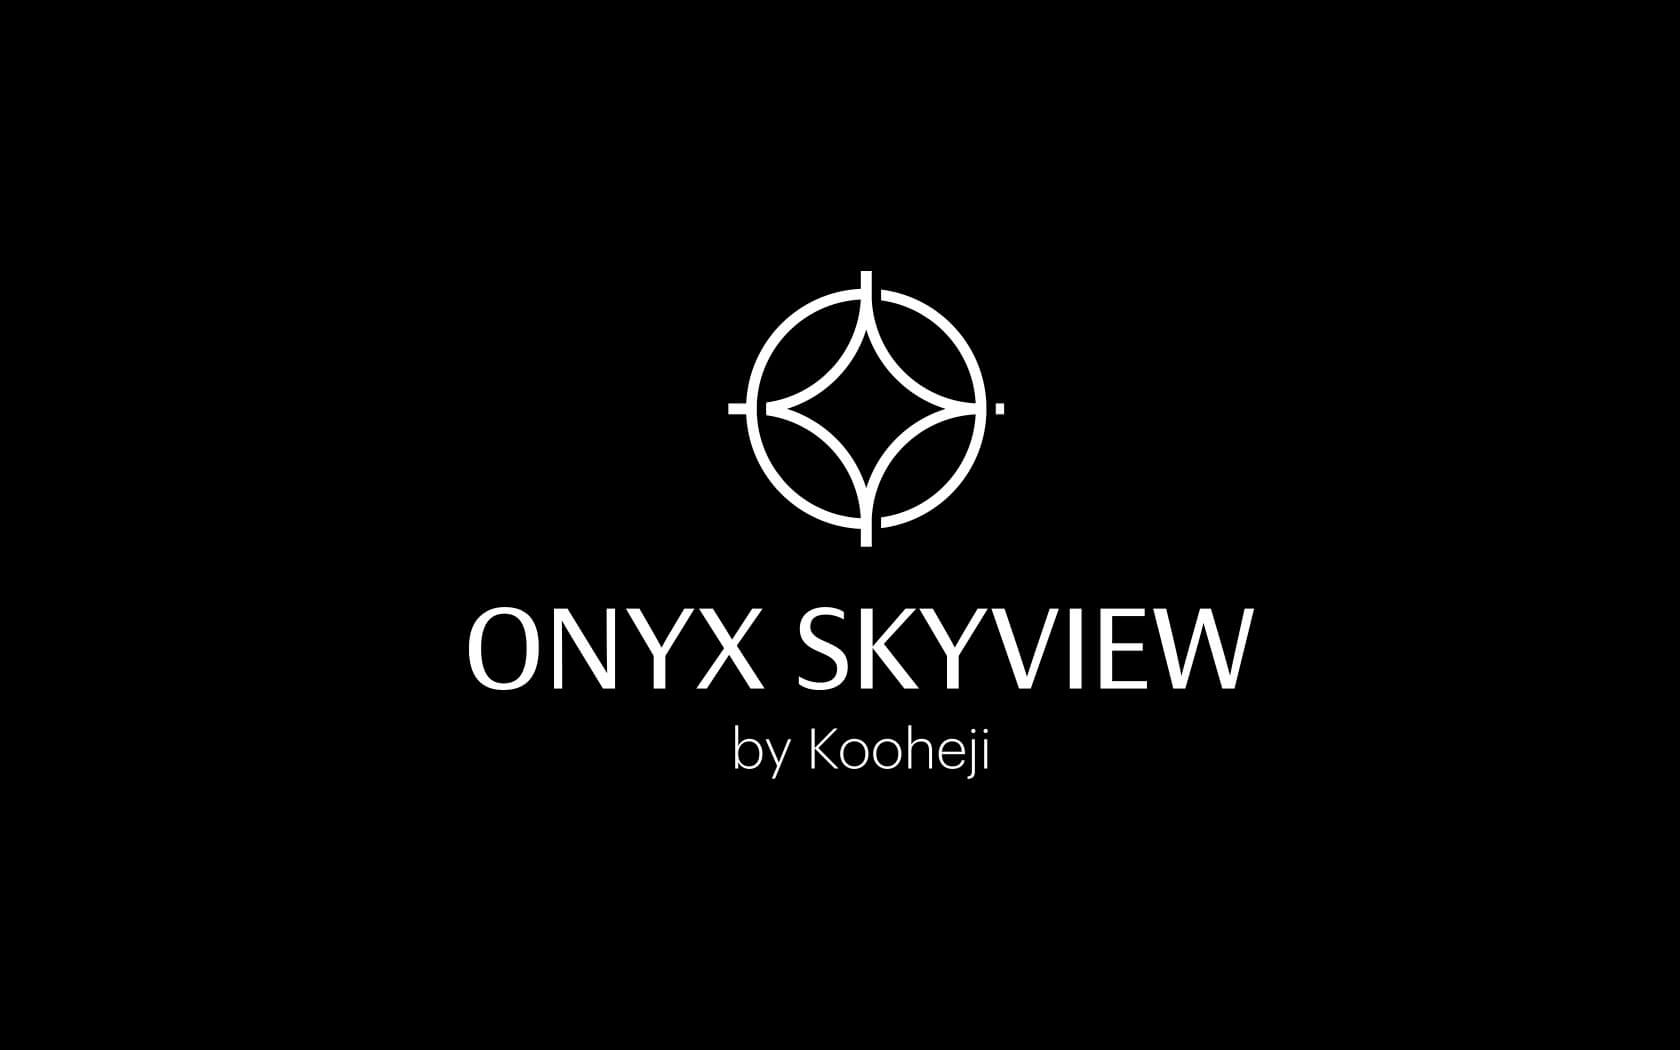 Onyx Skyview. Logo in white